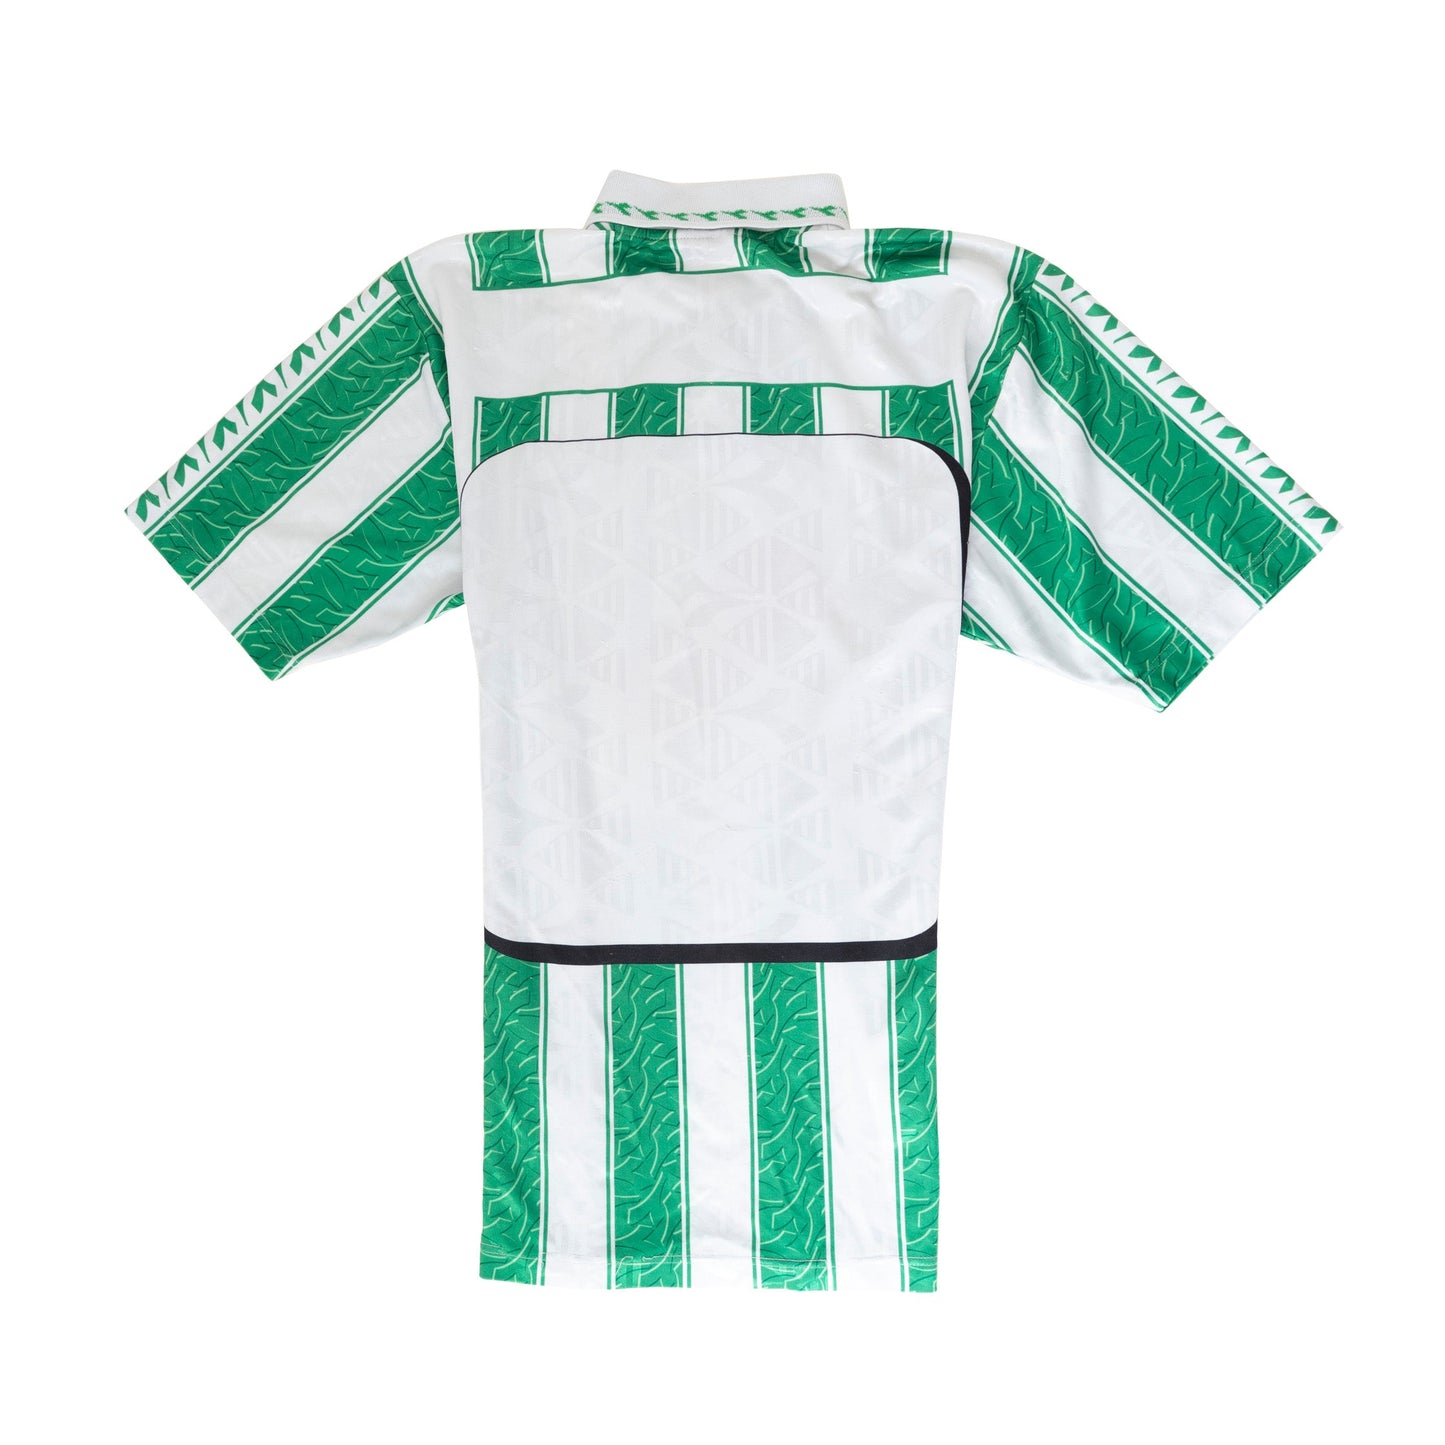 1994/96 Radip Vienna x Diadora Home Football Shirt